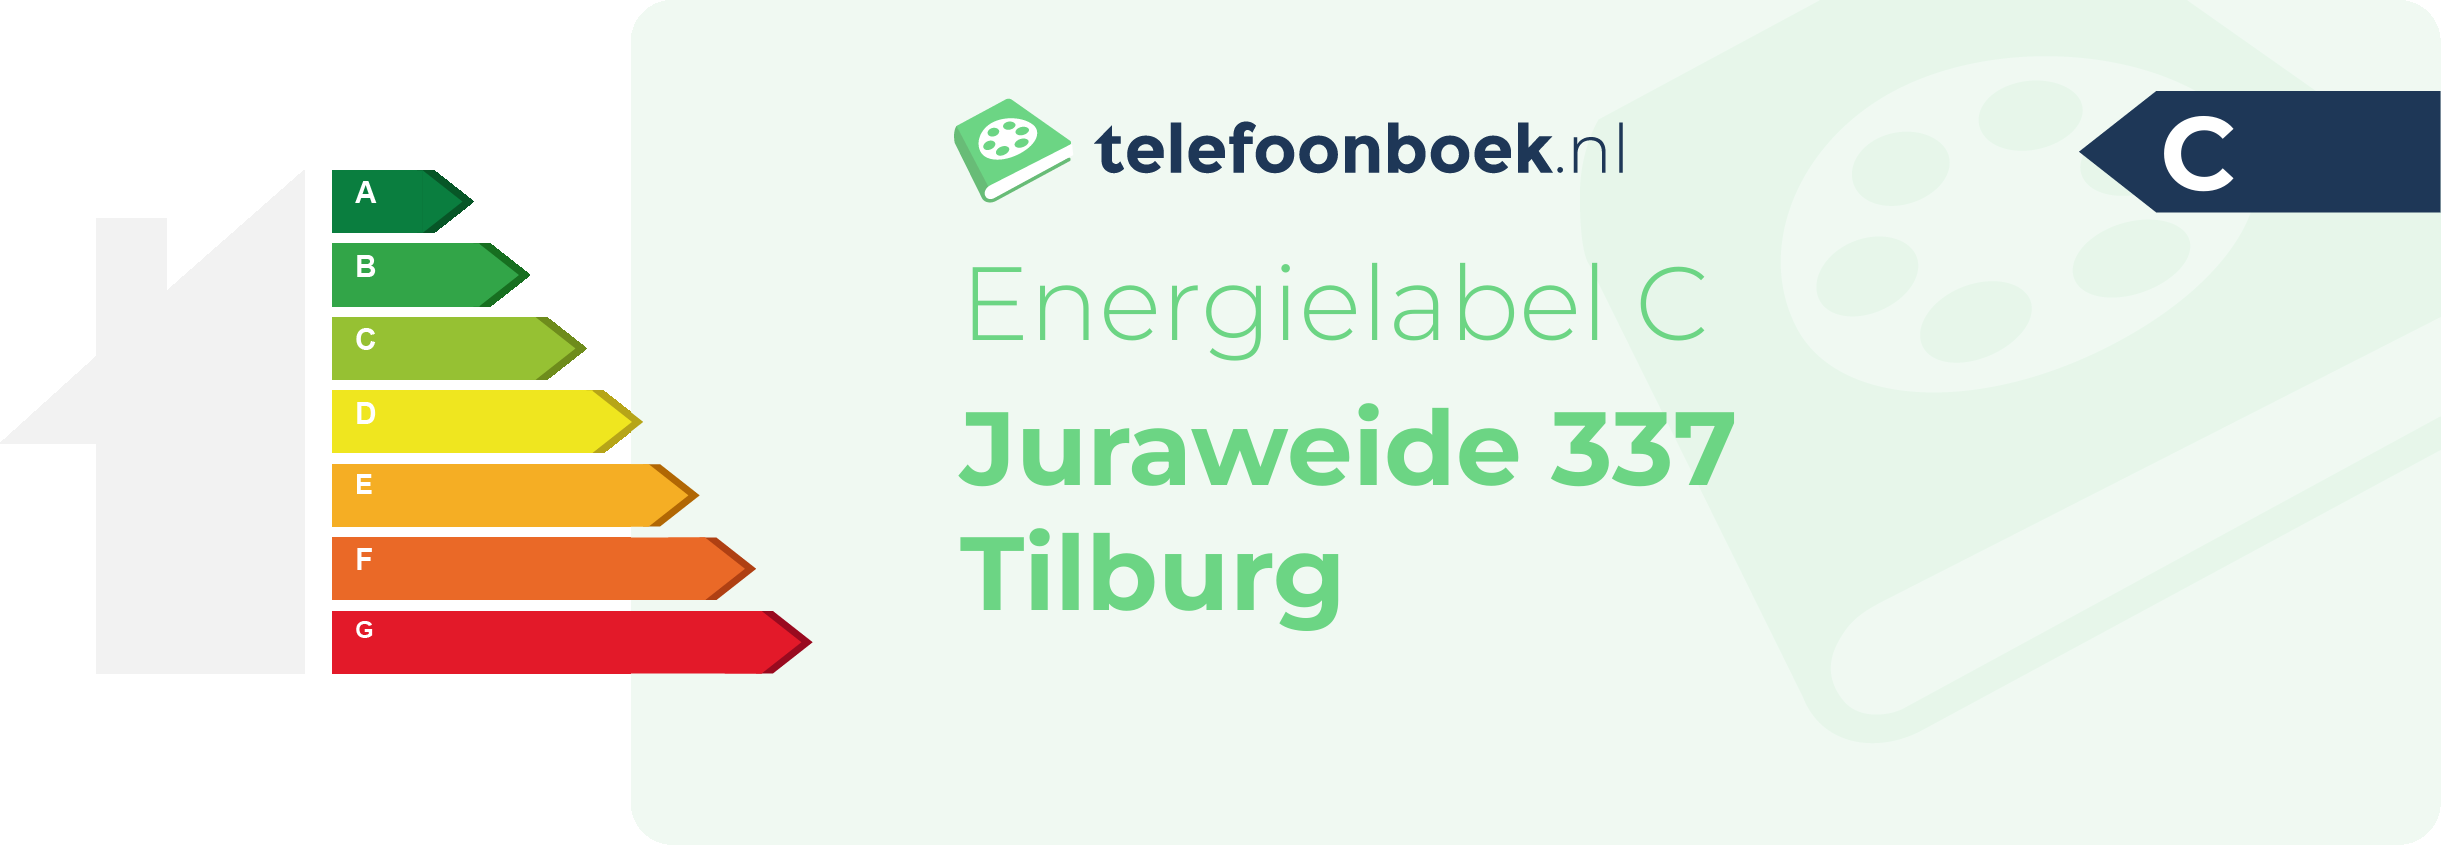 Energielabel Juraweide 337 Tilburg